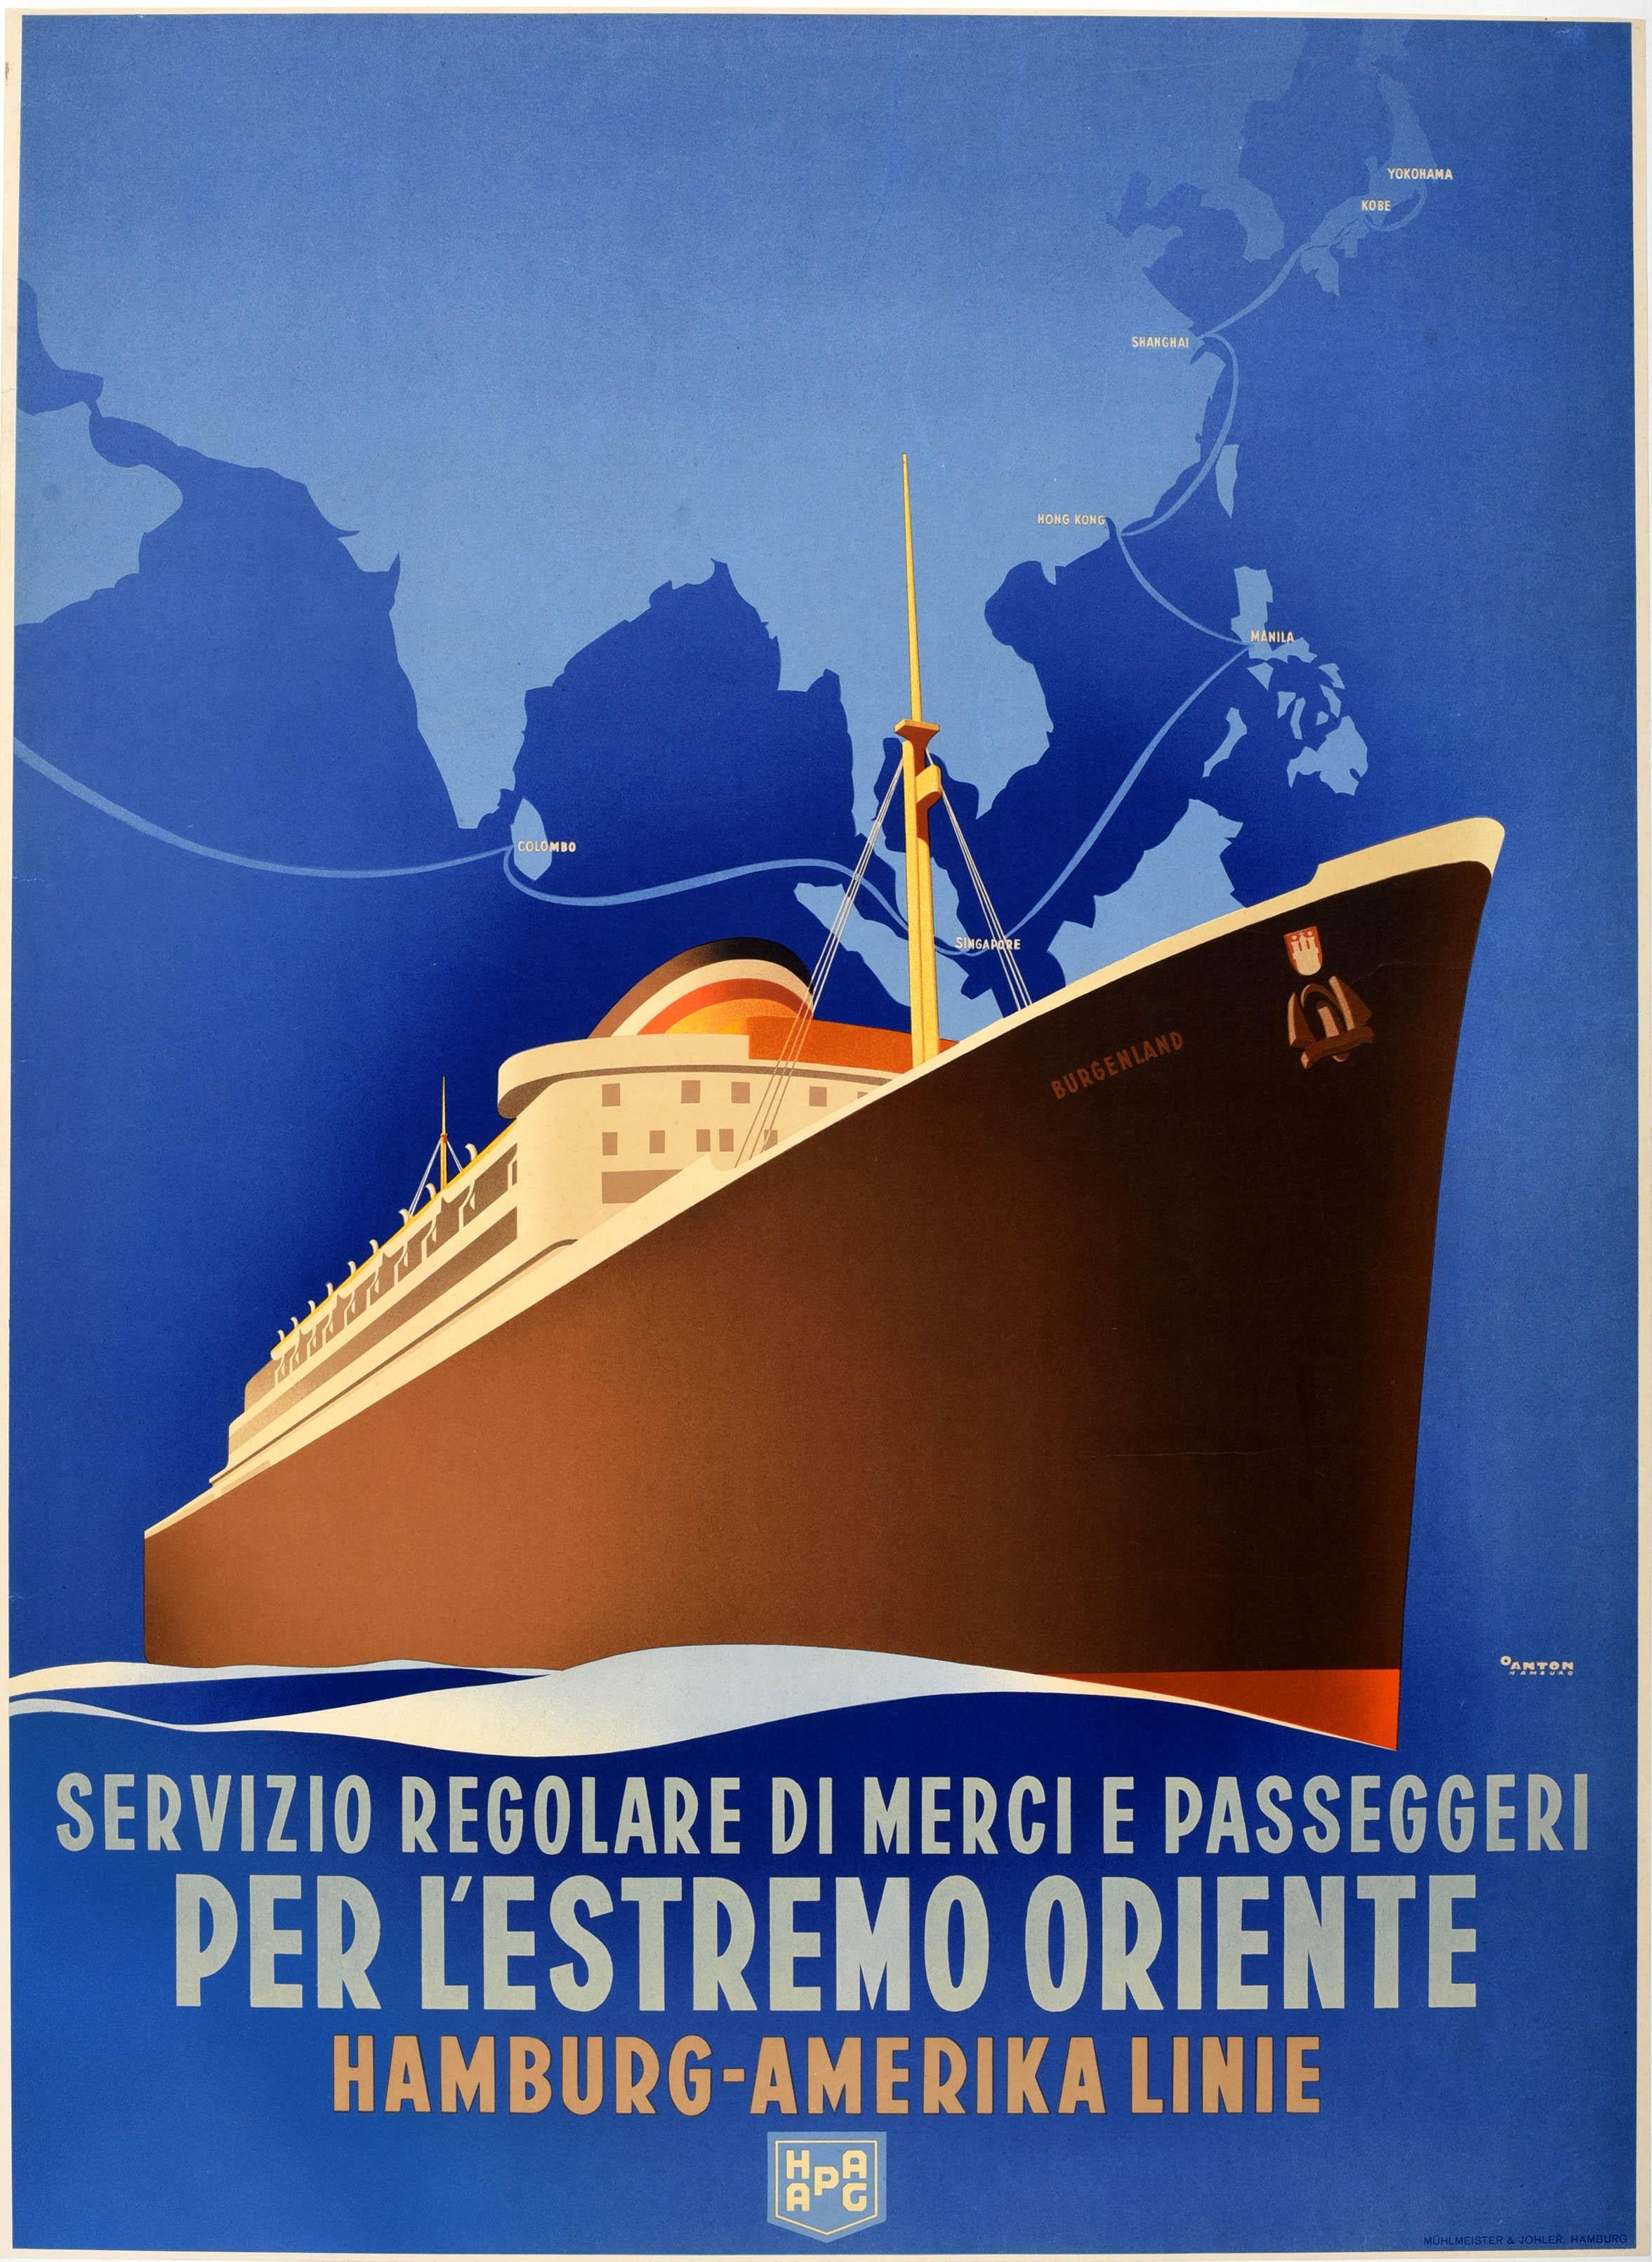 Manila Philippines Oceanliner Ship Vintage Travel Advertisement Art Poster 